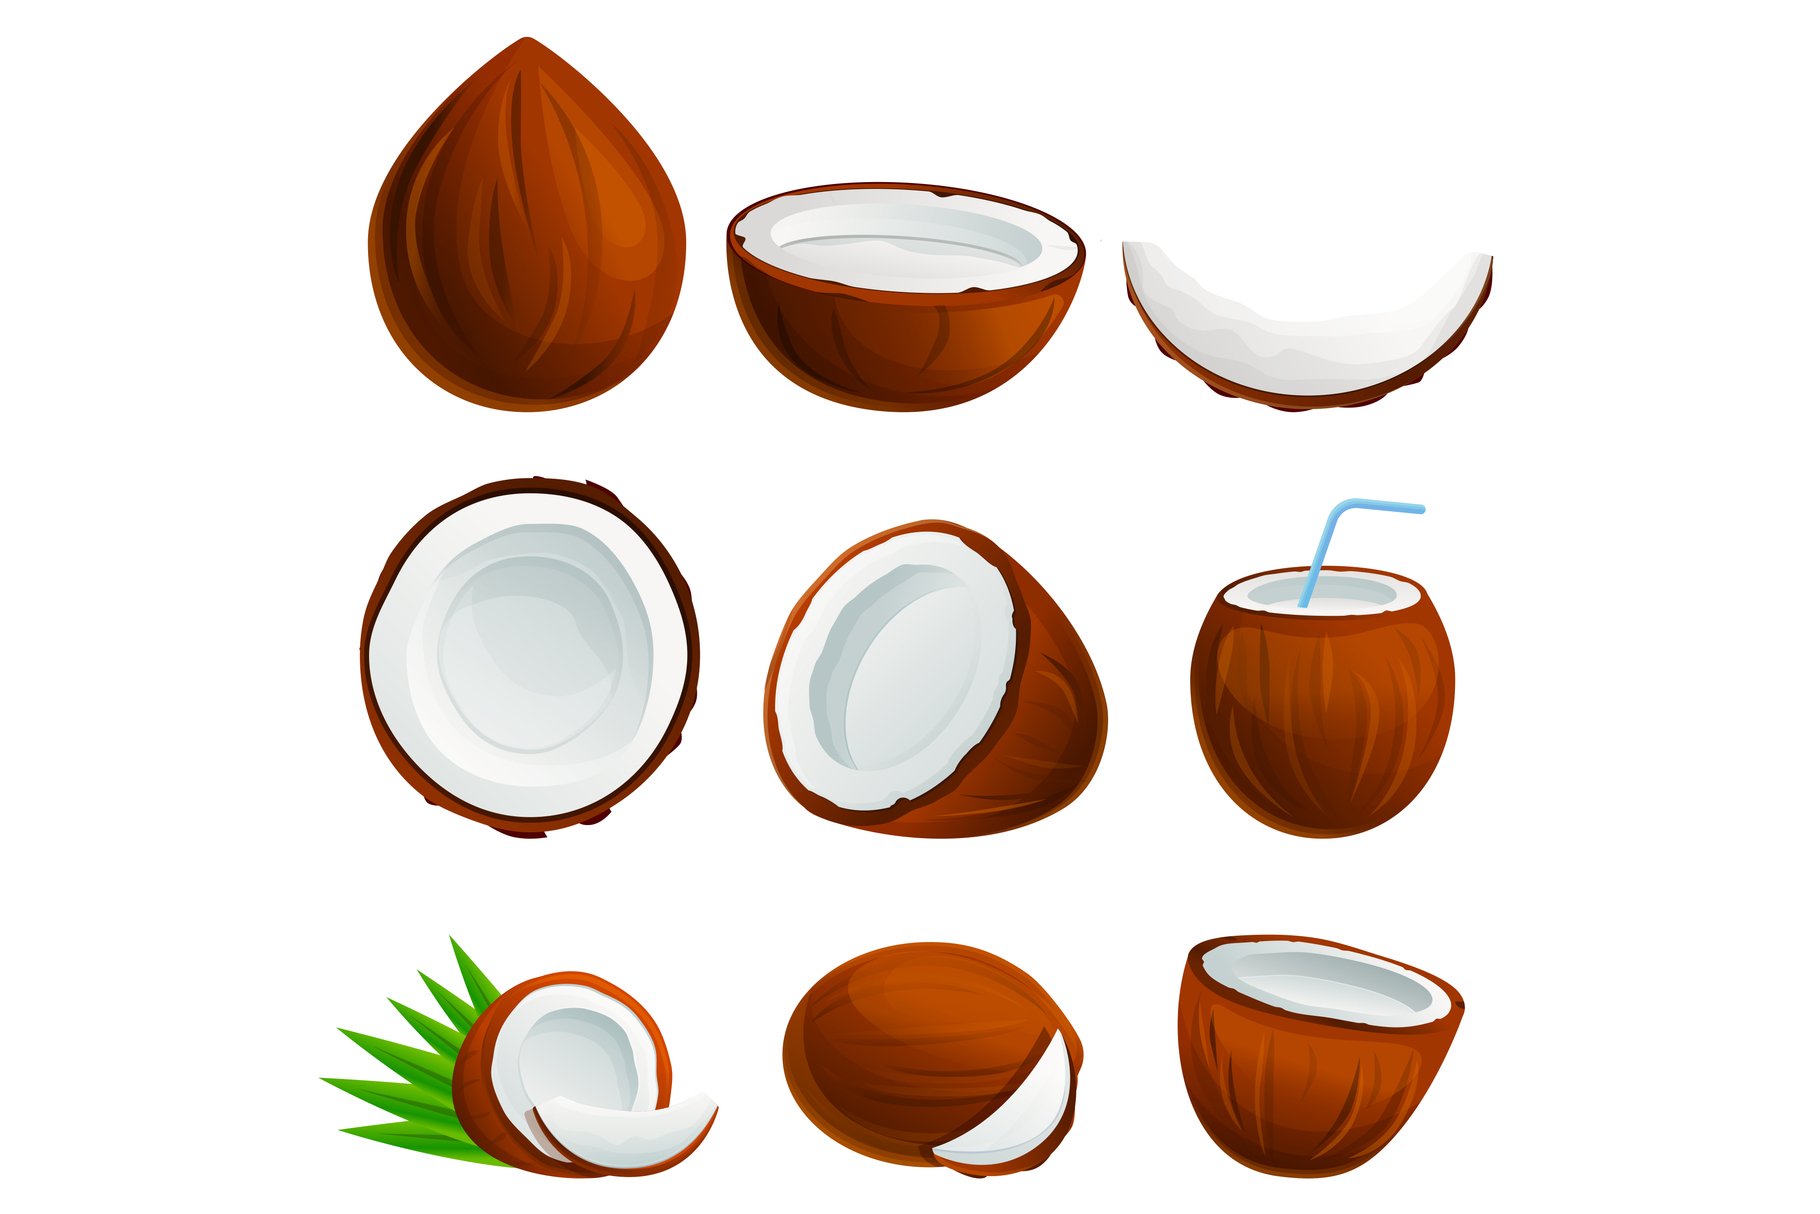 Some coconut parts.